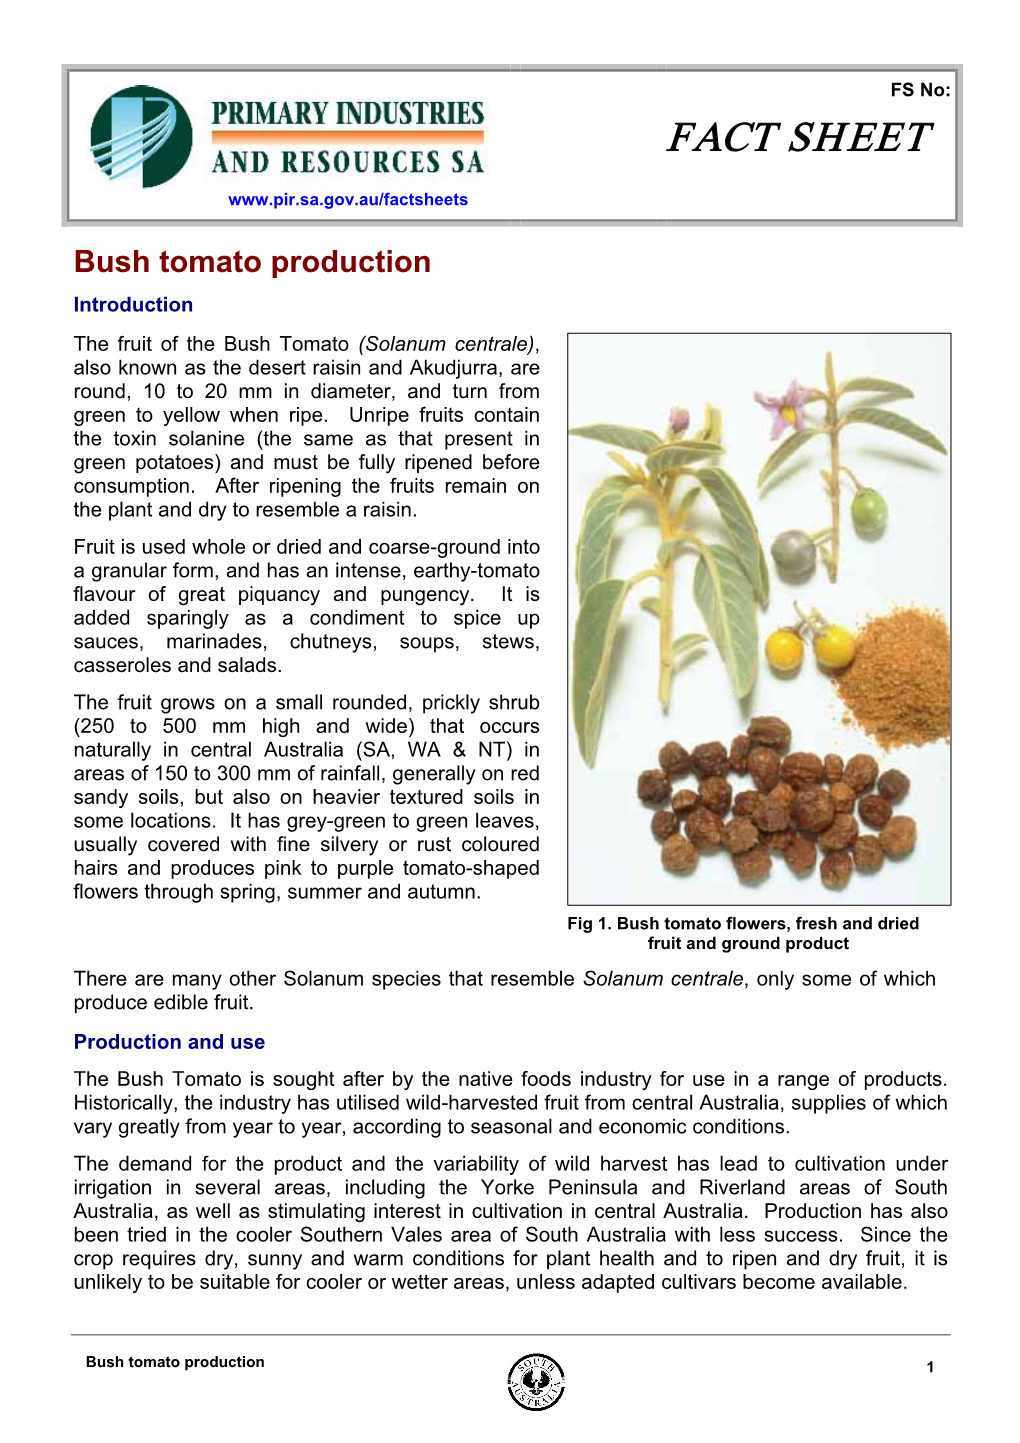 Bush Tomatoe Production